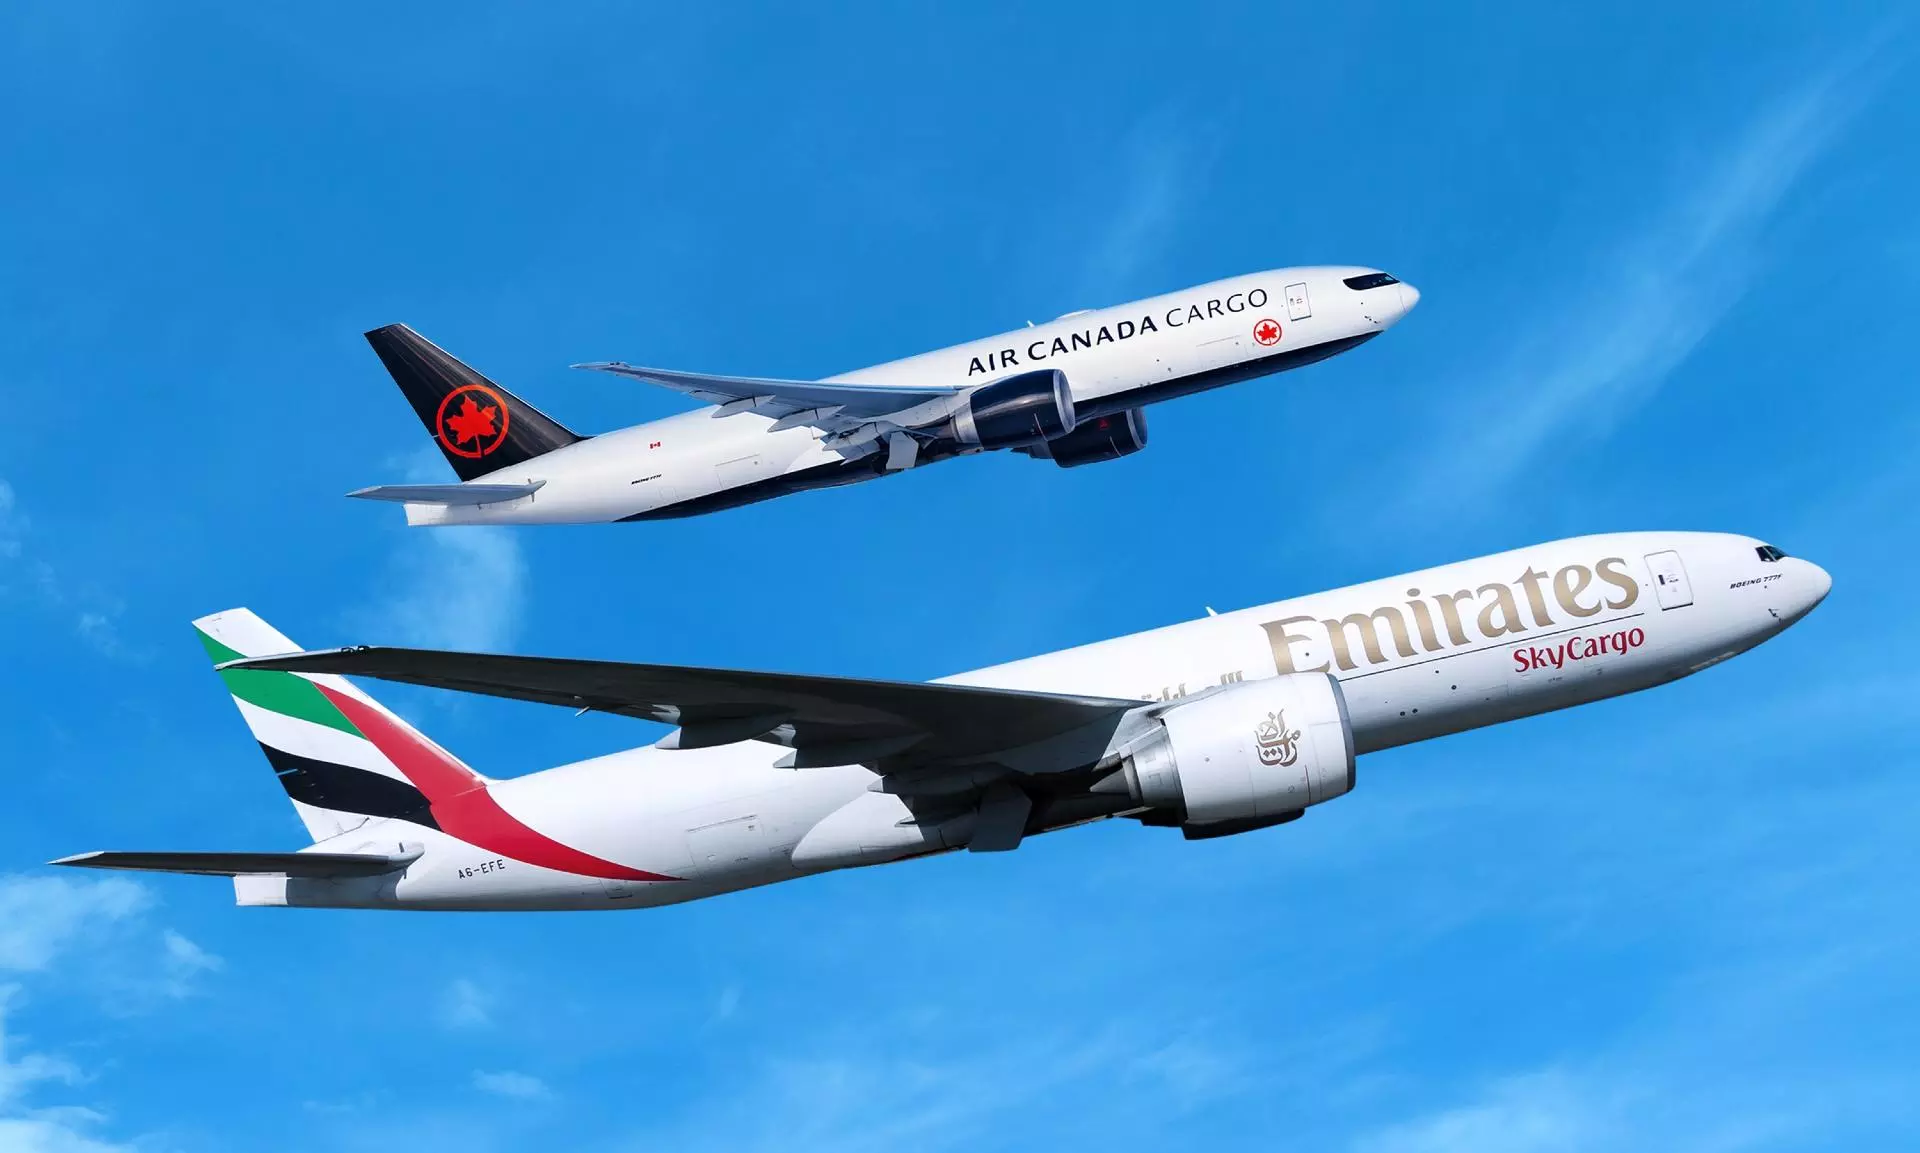 Emirates SkyCargo, Air Canada Cargo customers can book interline cargo